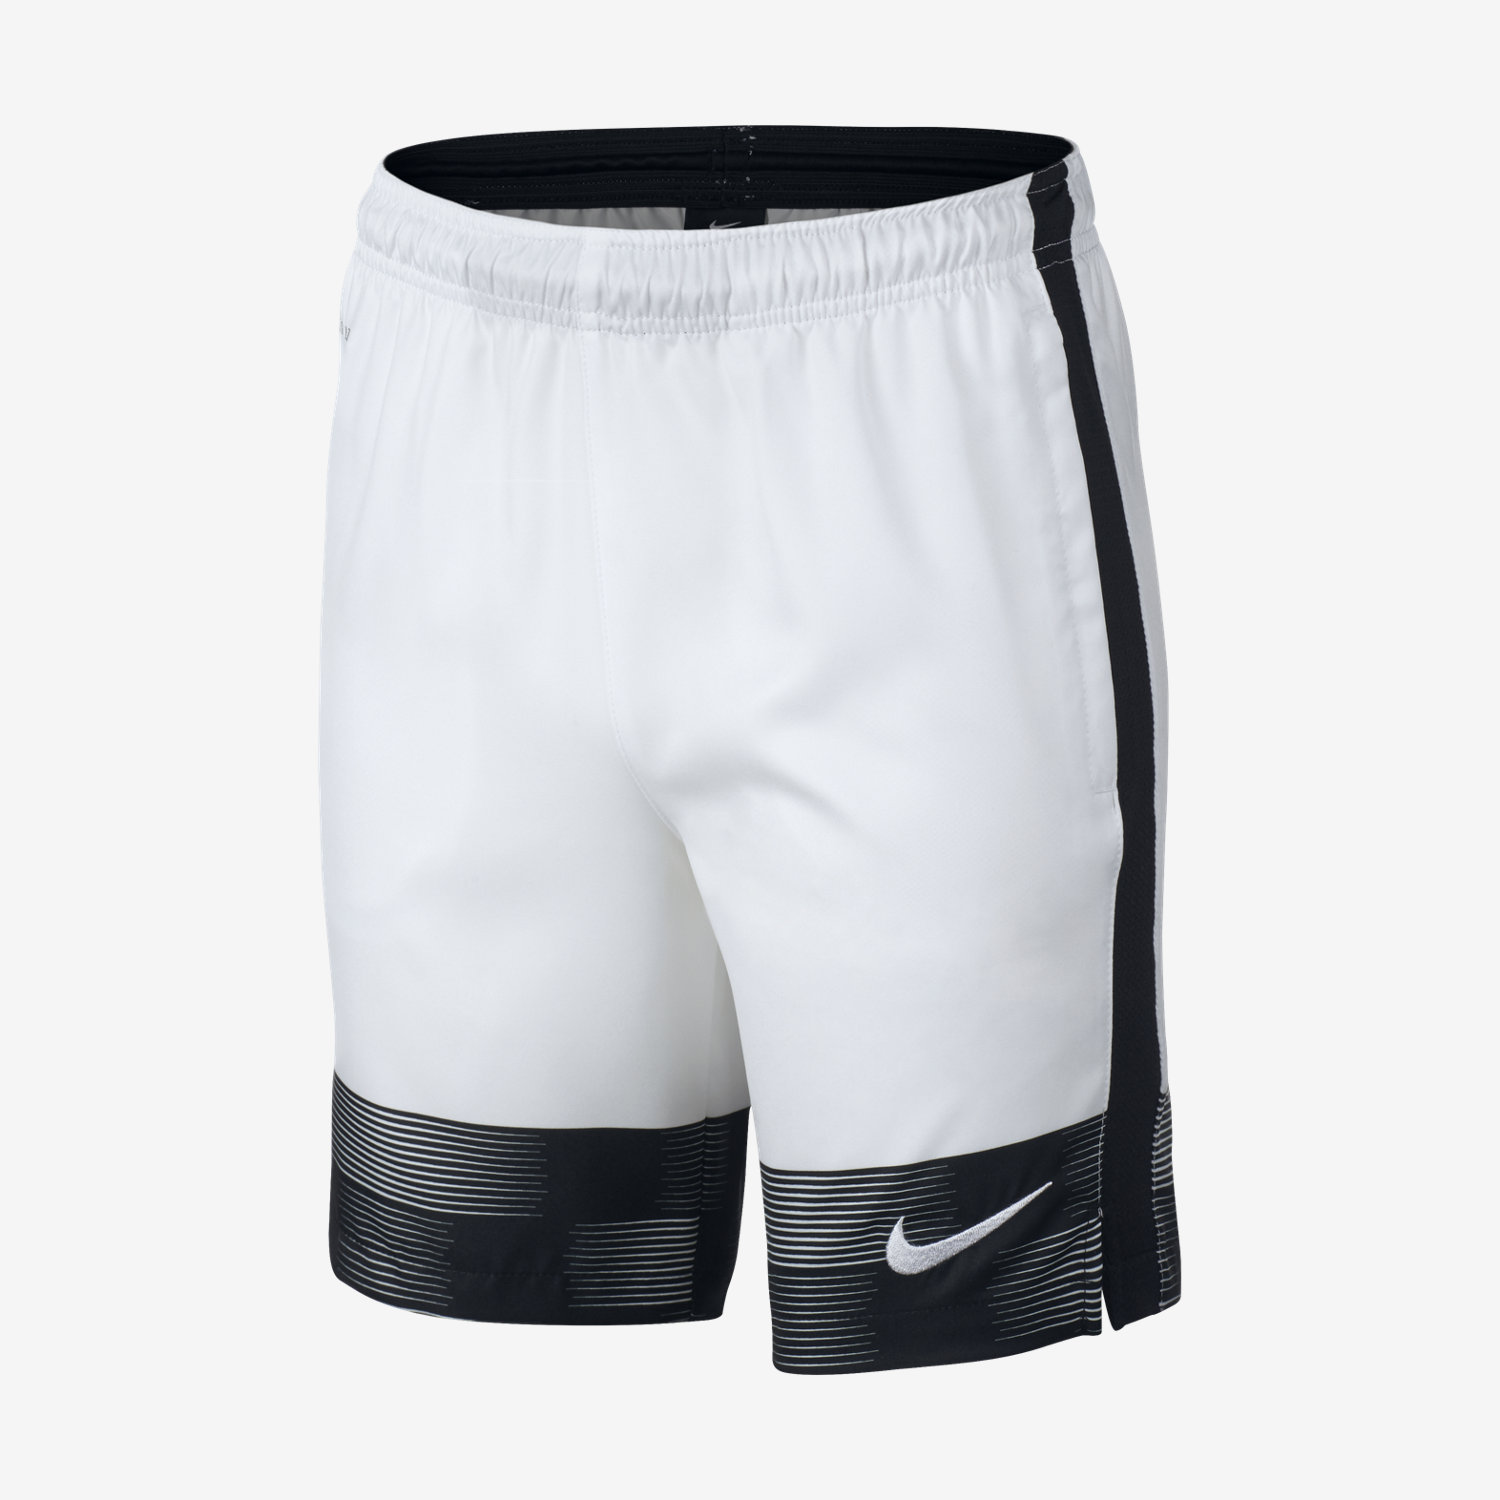 Nike Strike Graphic - Older Kids' Woven Football Shorts